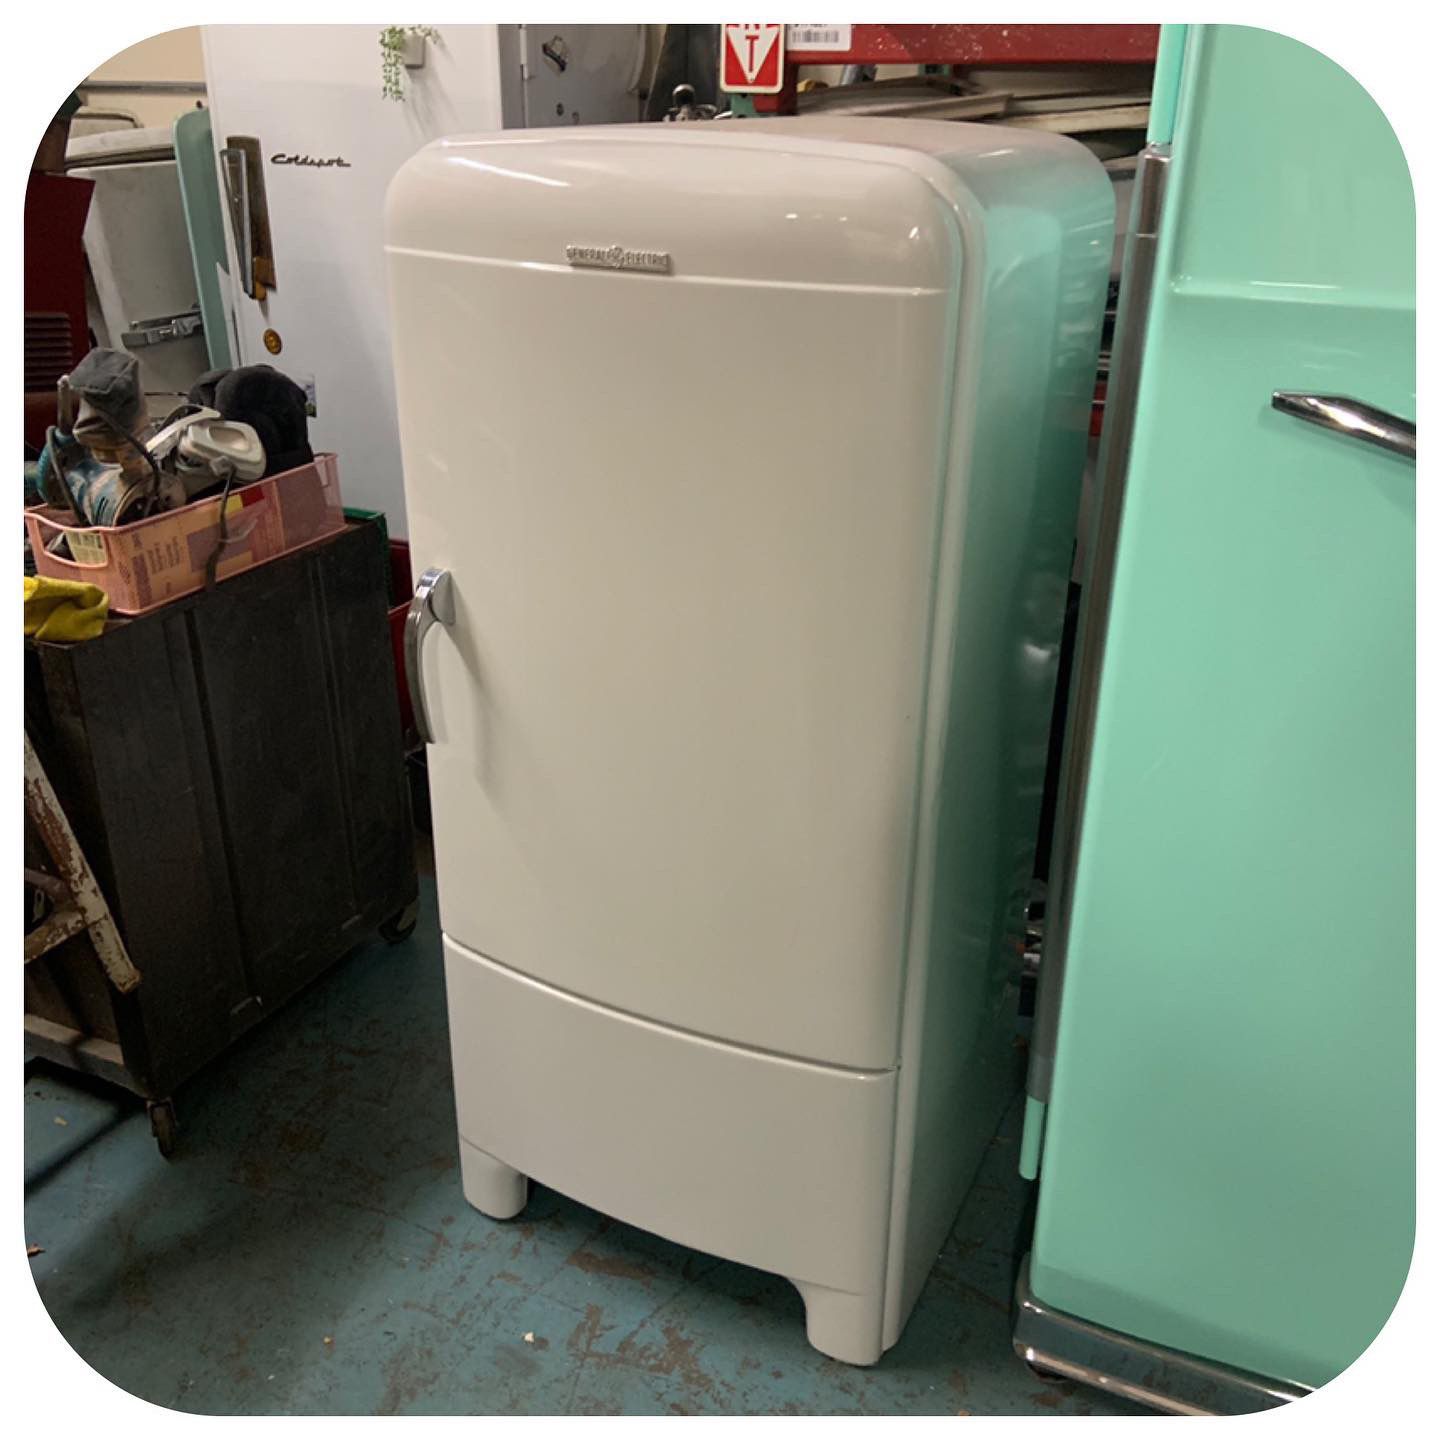 Vintage refrigerator vintage trailer refrigerator apartment mini